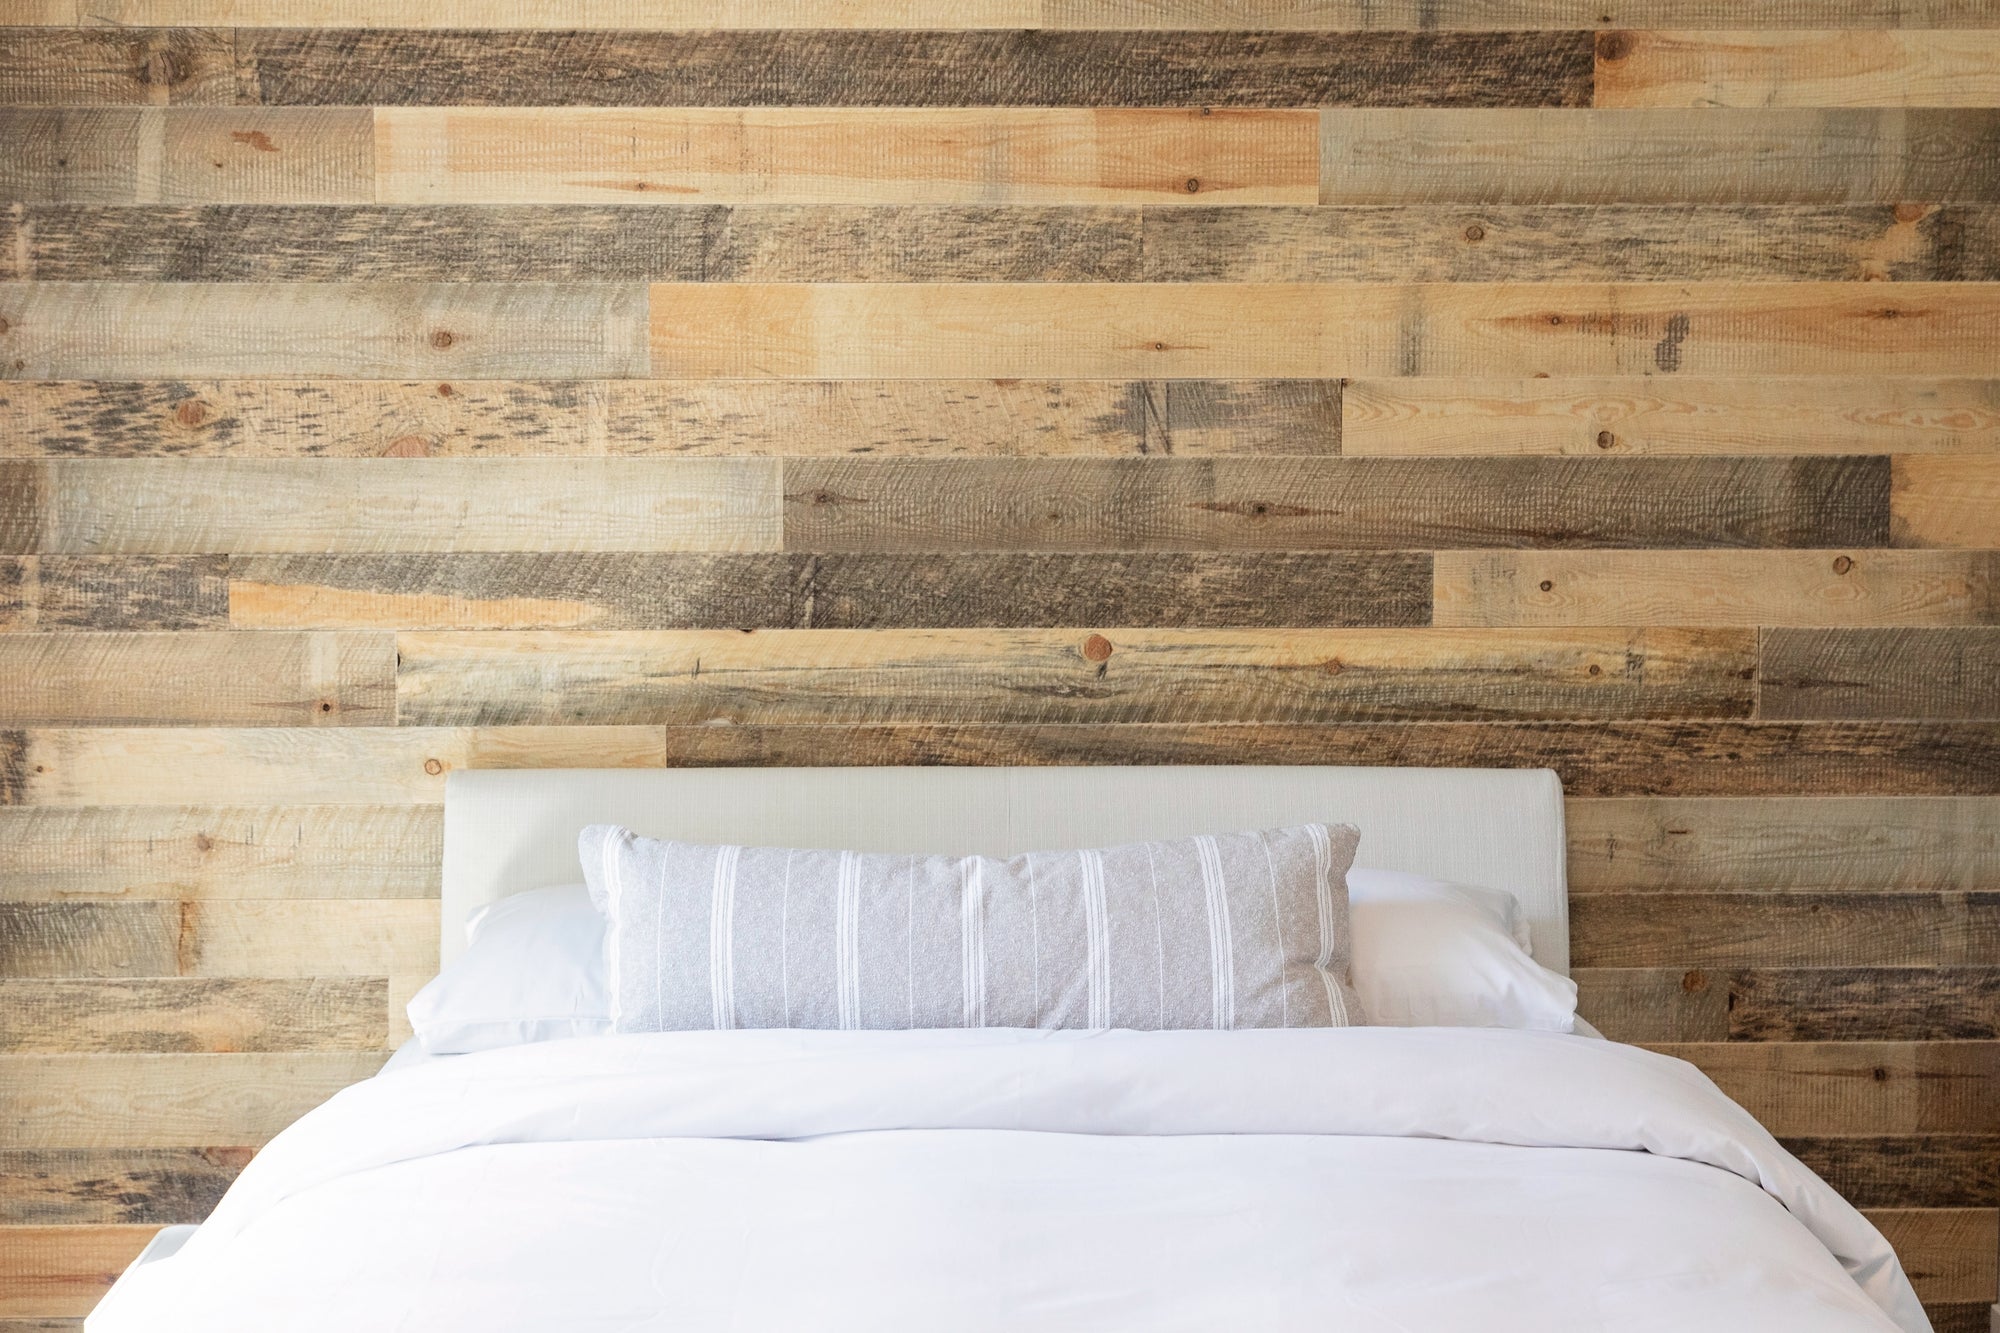 Reclaimed Wood Shiplap - Dakota Timber Co Wall Ceiling Paneling - Wood Paneling